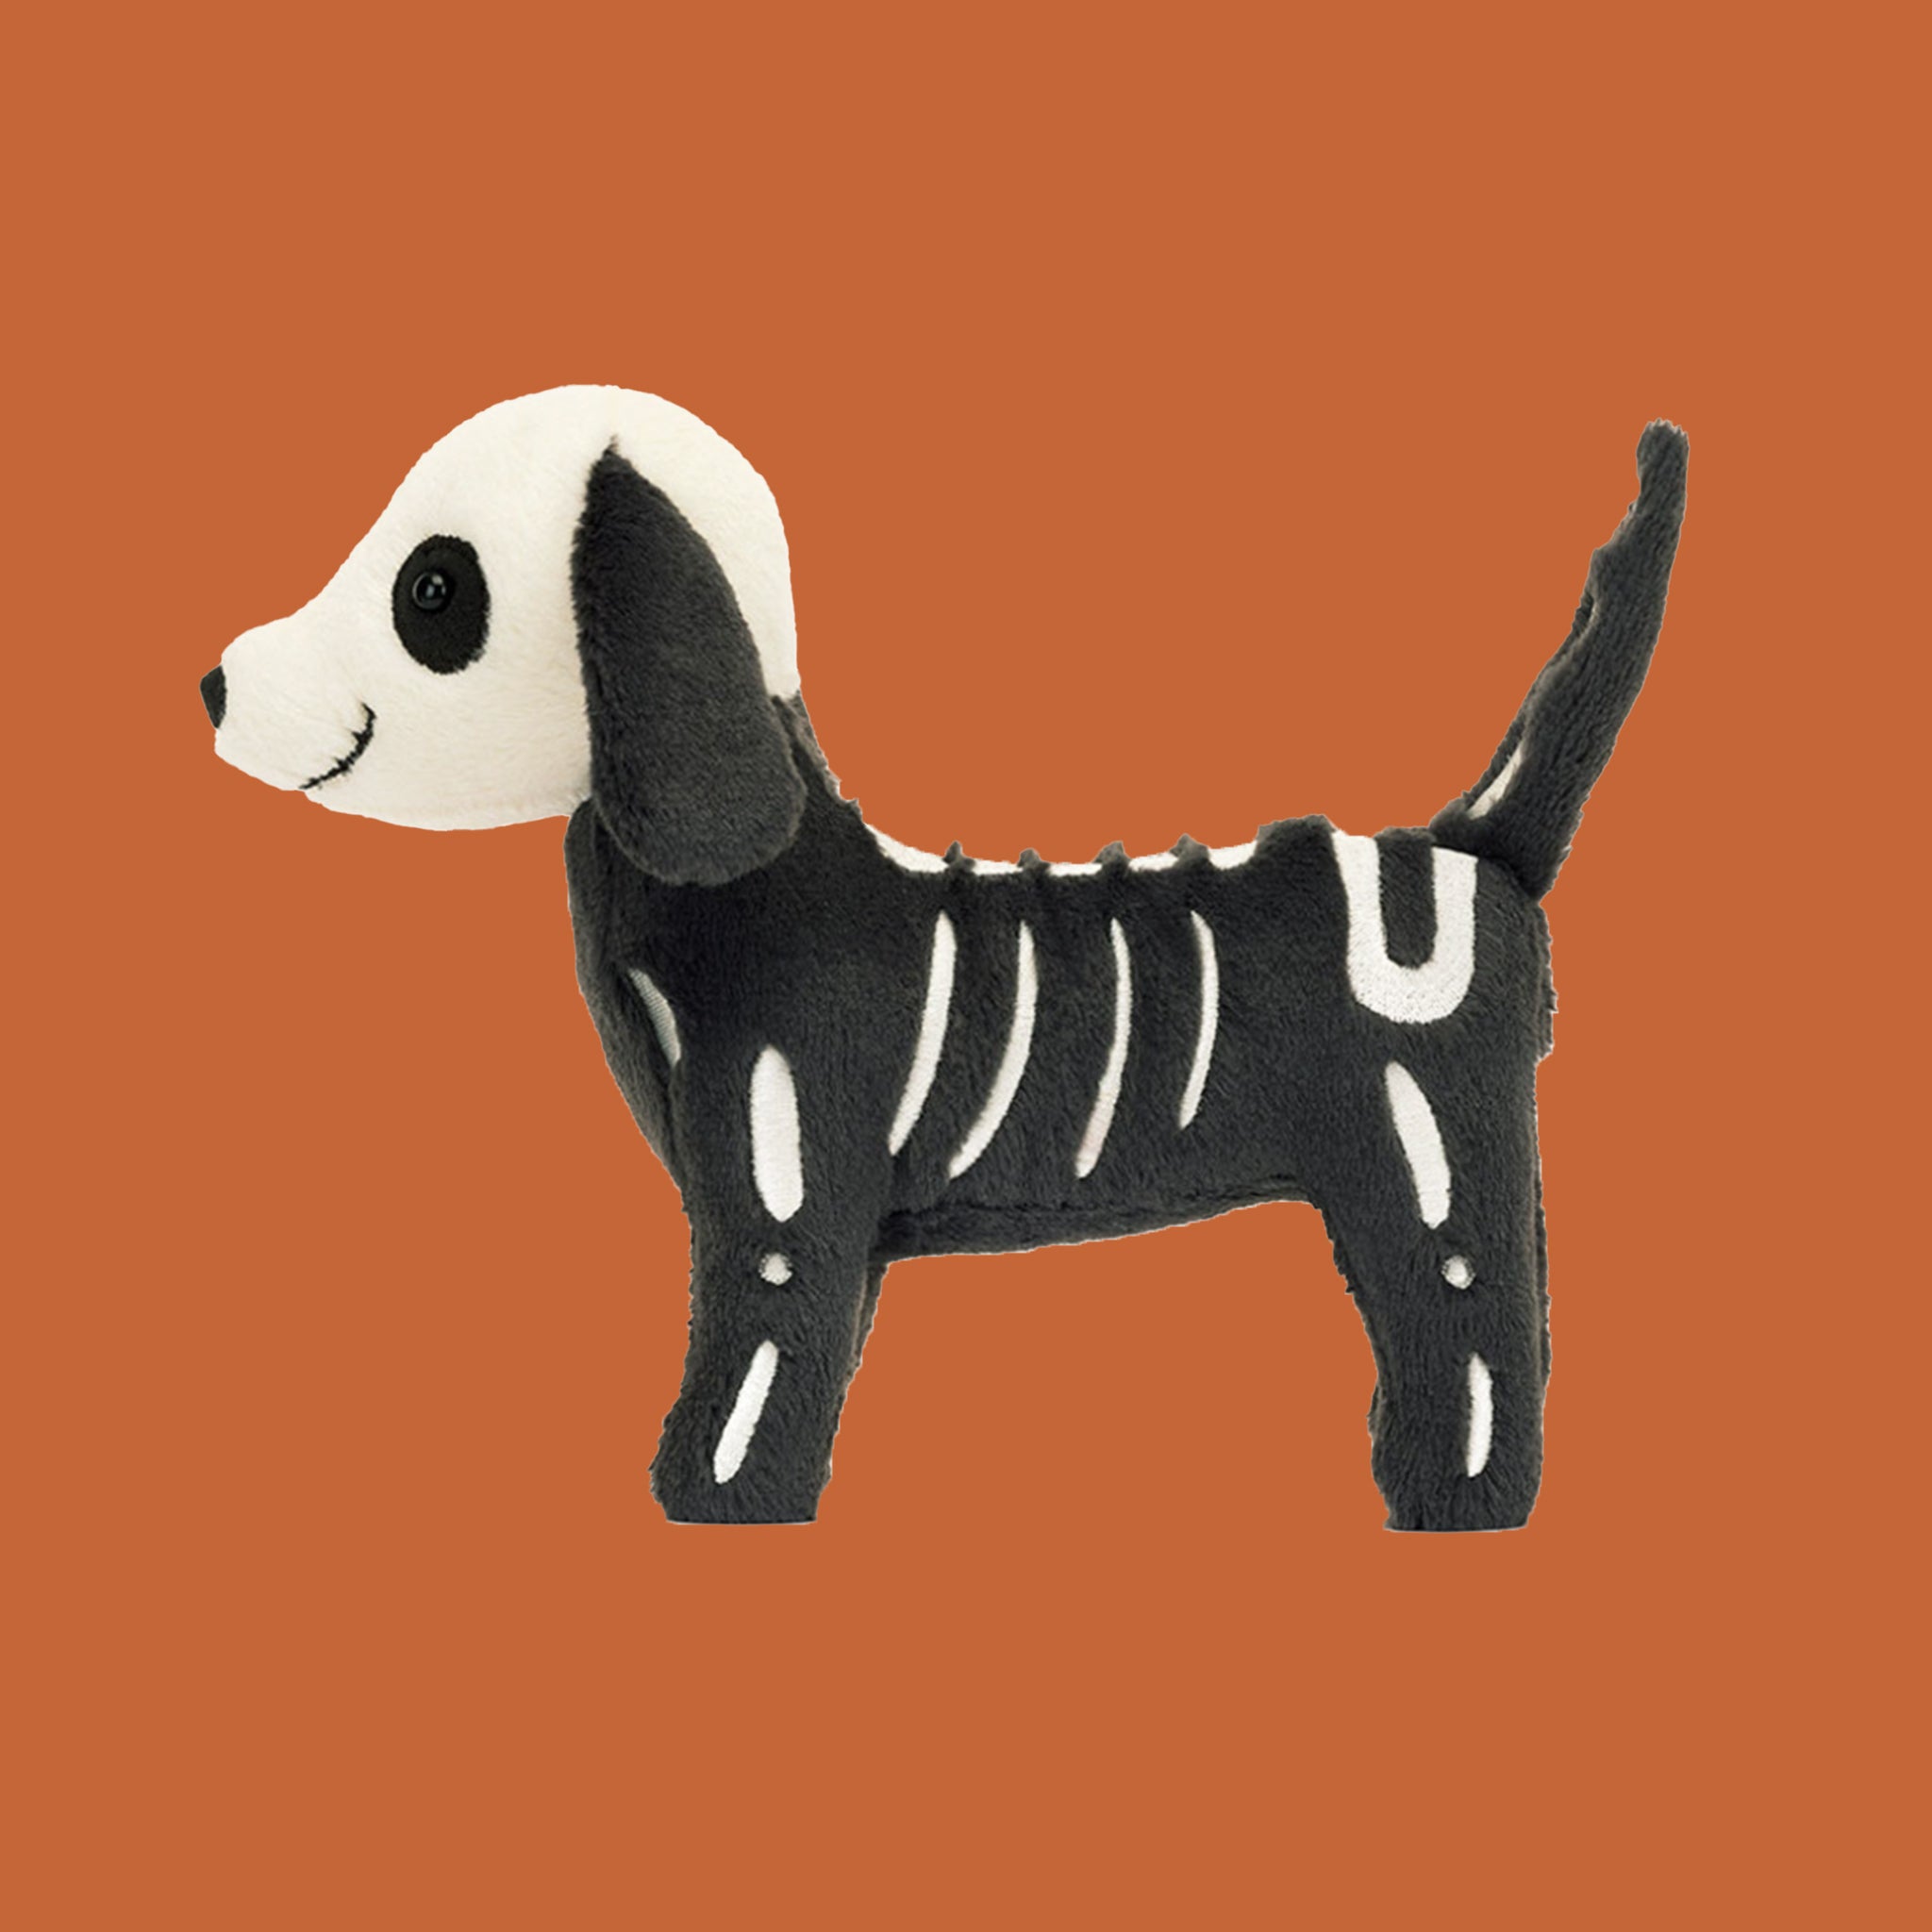 A black and white skeledog shaped stuffed toy.